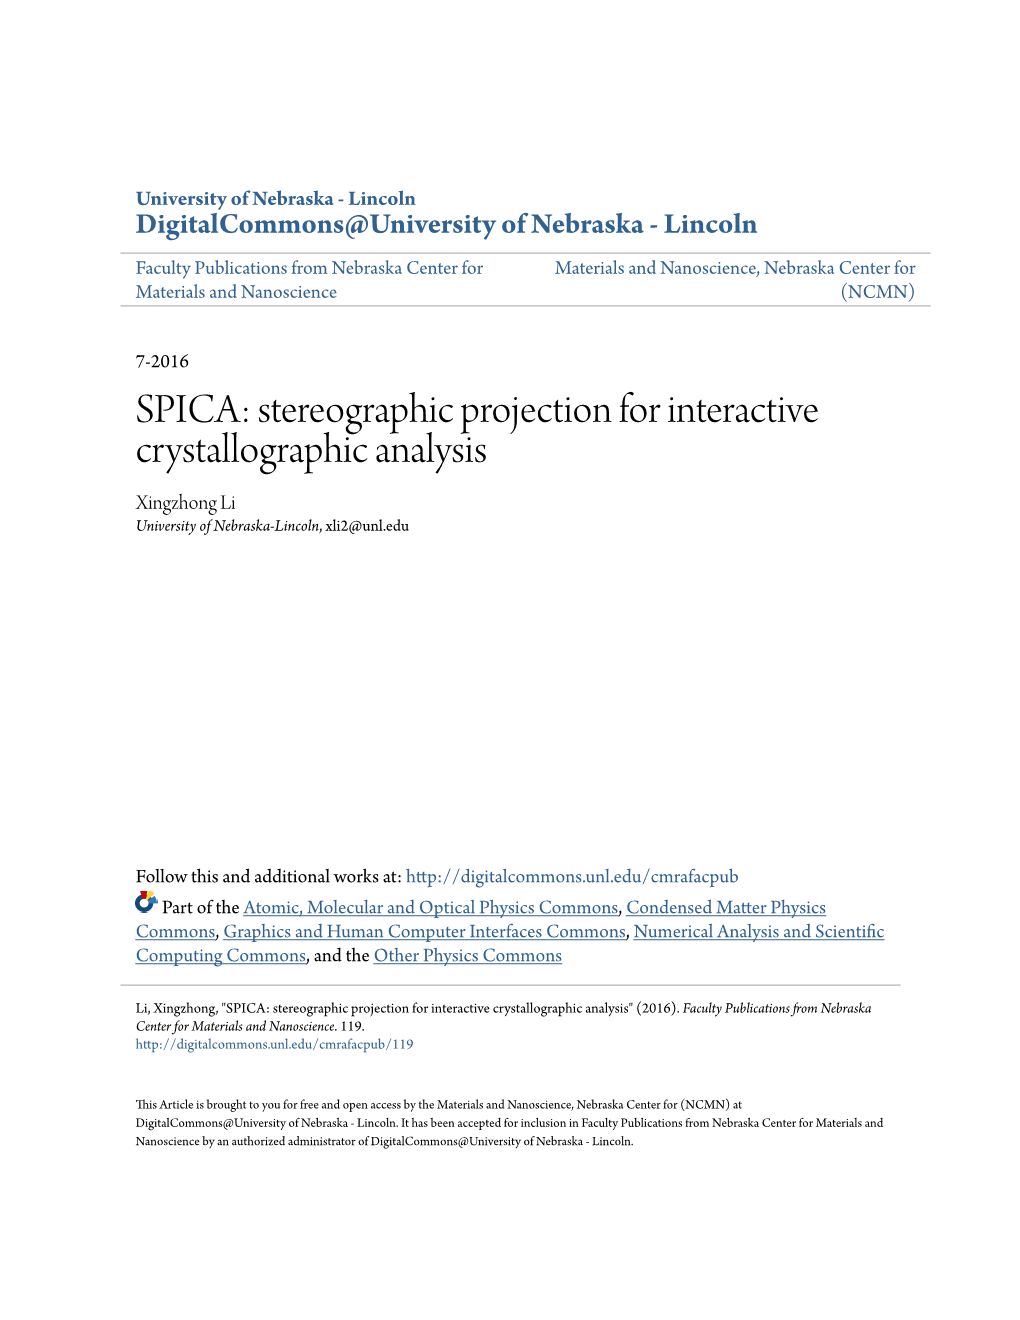 SPICA: Stereographic Projection for Interactive Crystallographic Analysis Xingzhong Li University of Nebraska-Lincoln, Xli2@Unl.Edu